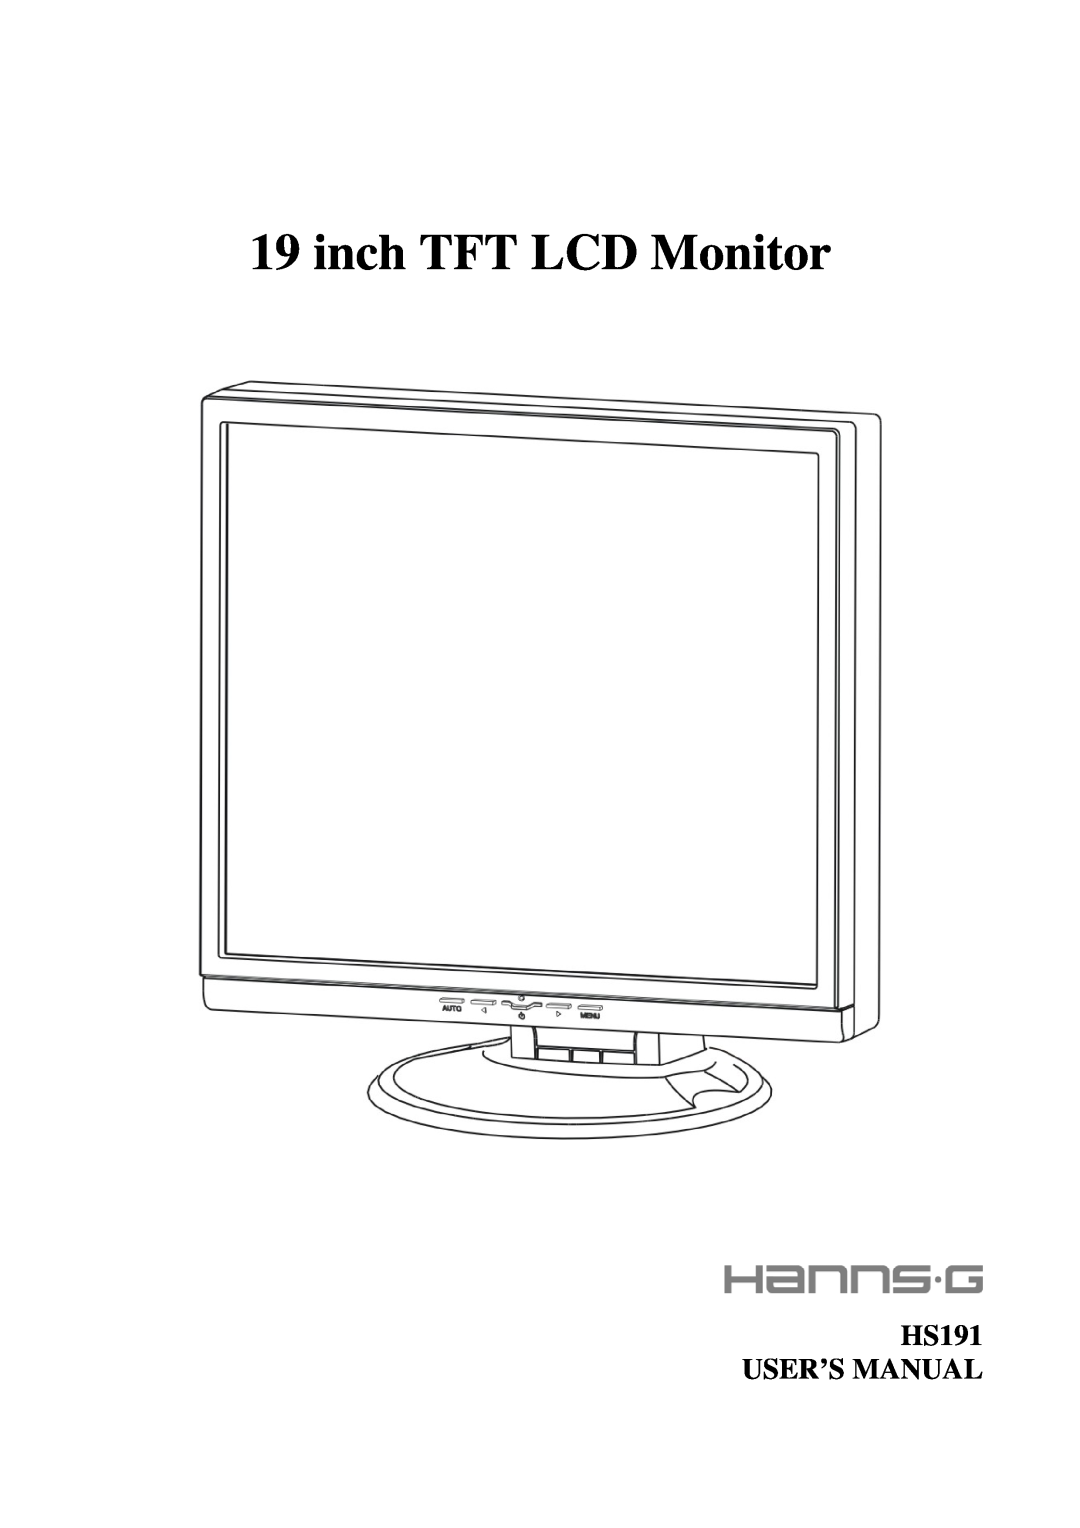 Hanns.G user manual inch TFT LCD Monitor, HS191 USER’S MANUAL 